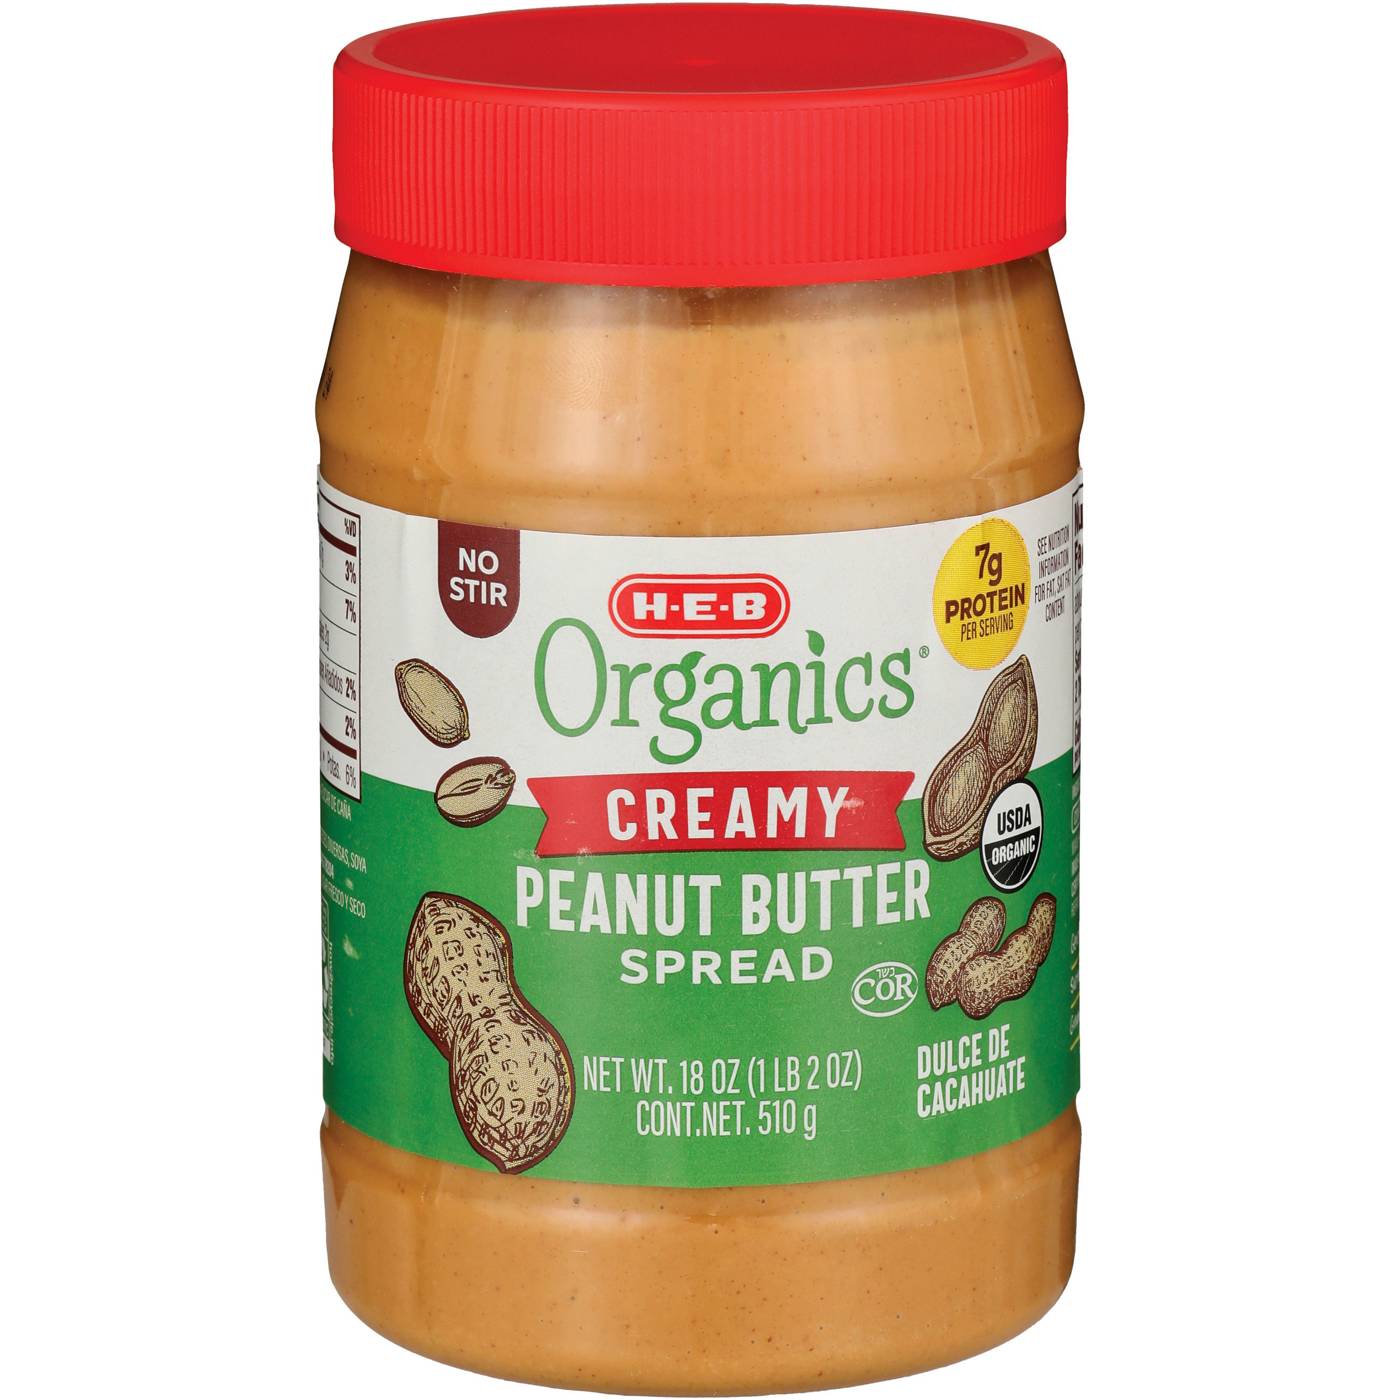 H-E-B Organics Peanut Butter Spread - Creamy; image 2 of 2